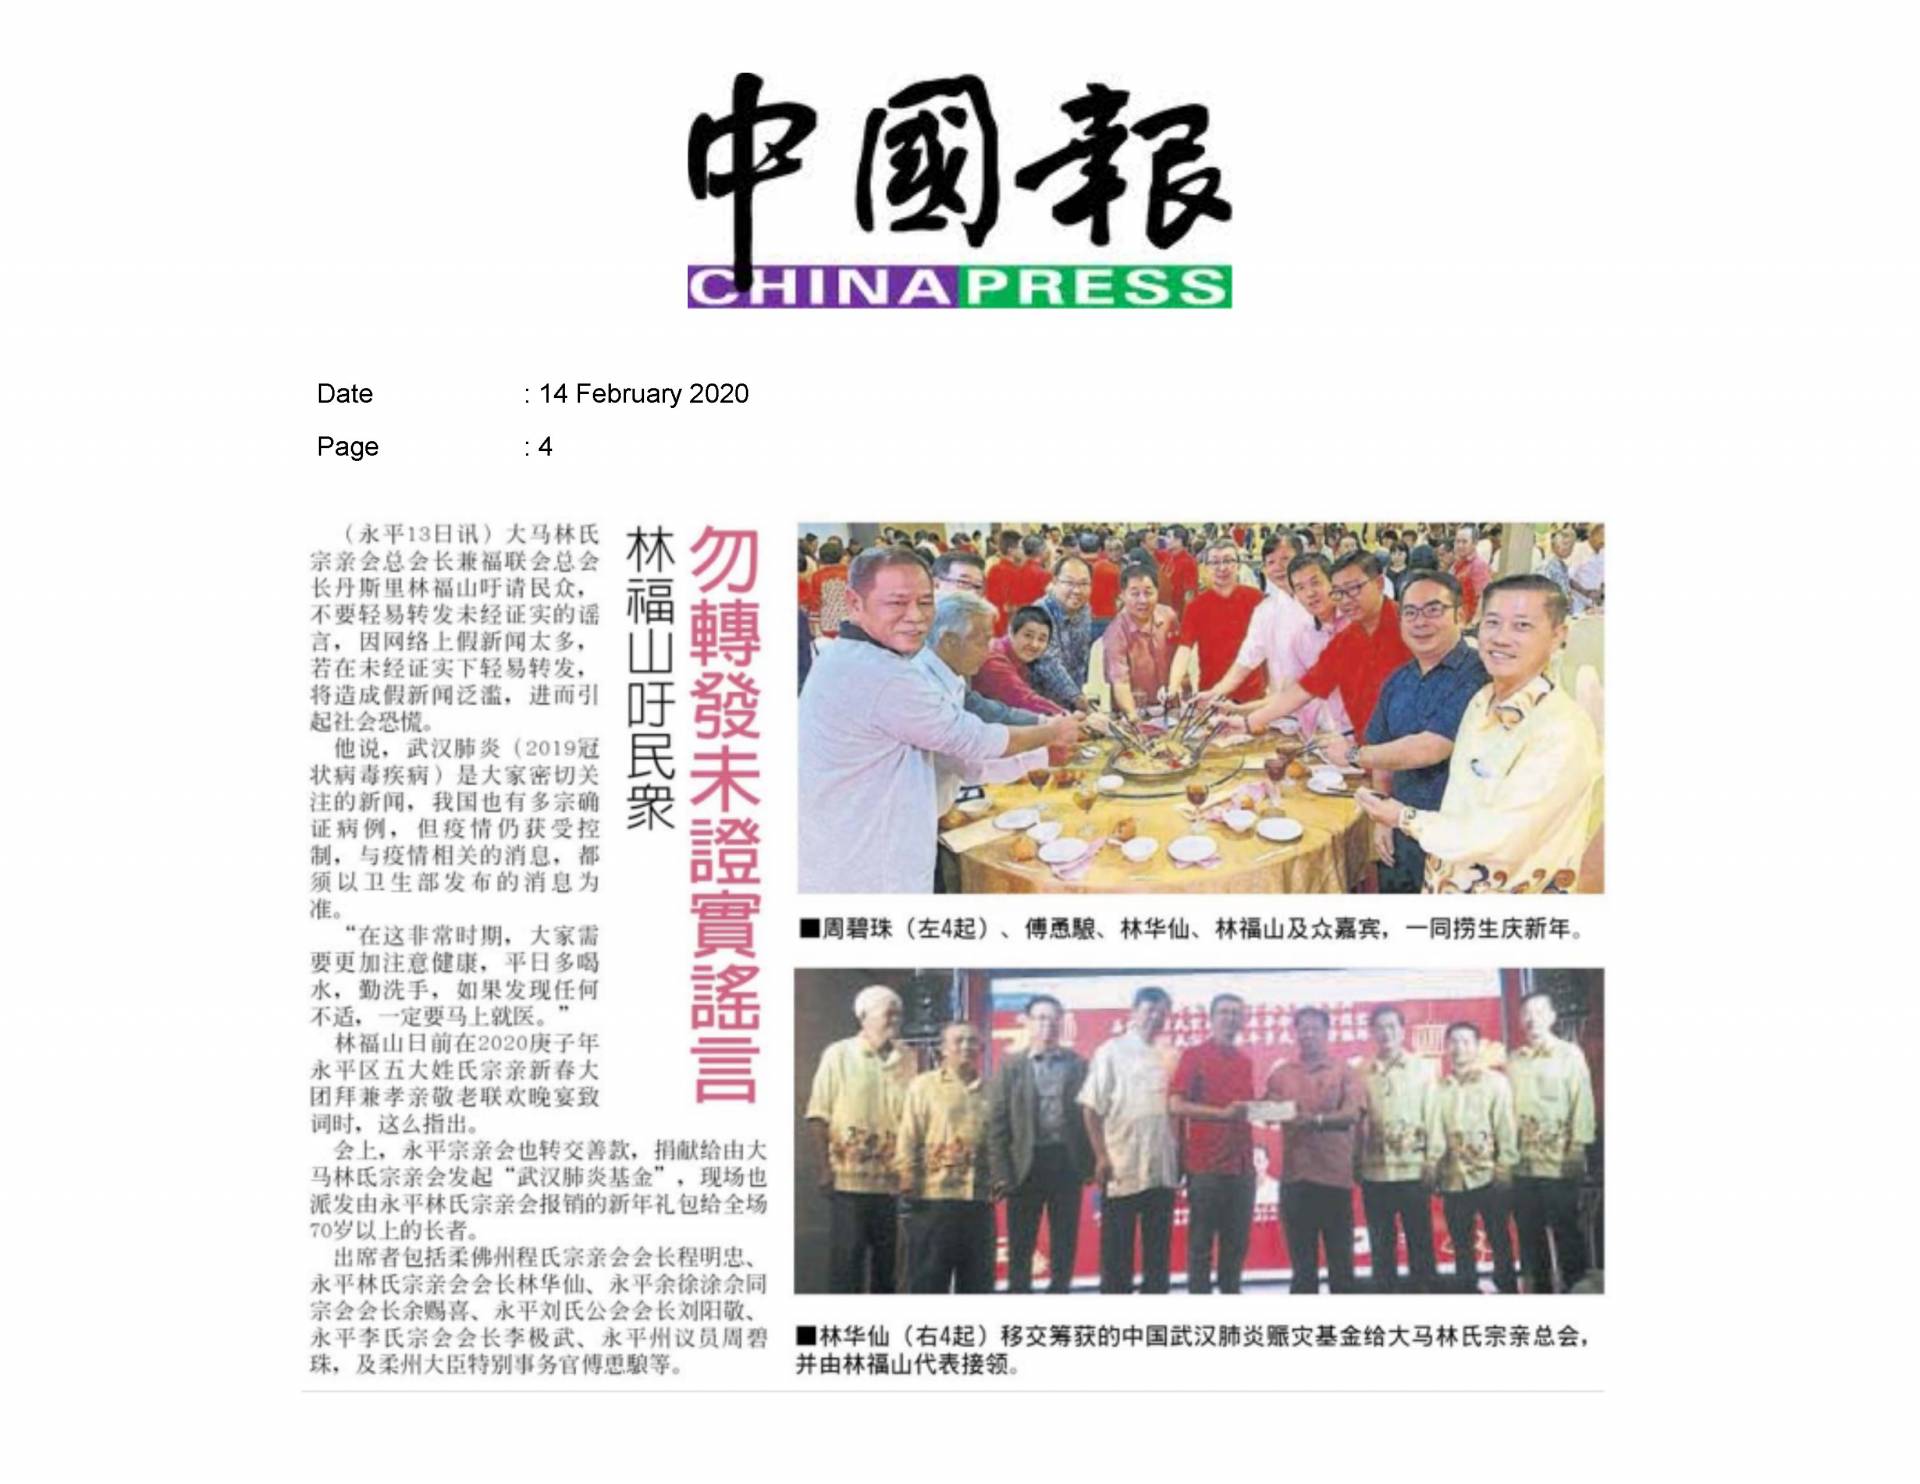 2020.02.14 China Press - Lim Hock San urges public not to forward unverified rumours